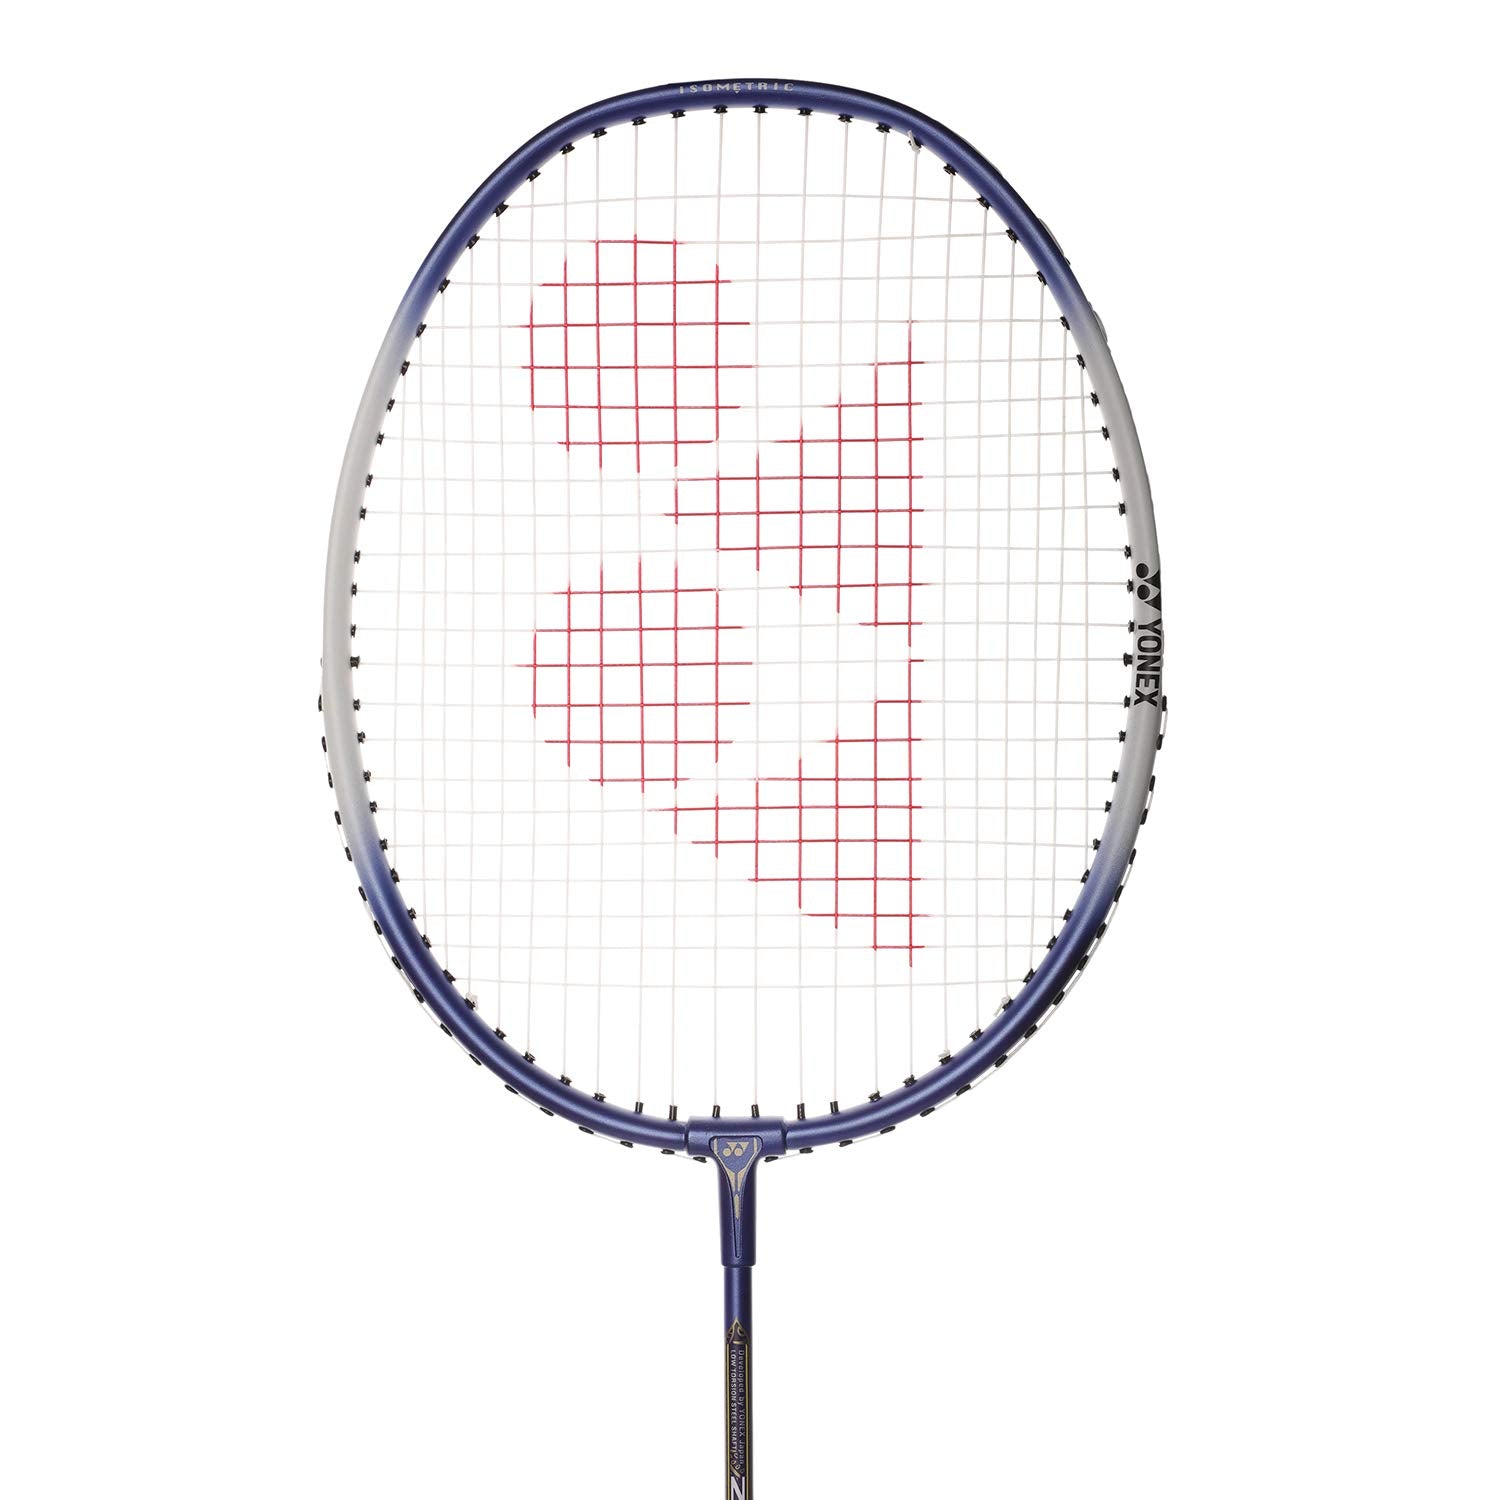 Yonex ZR 100 Light Dark Blue Aluminium Badminton Racket with Full Cover Made in India sppartos